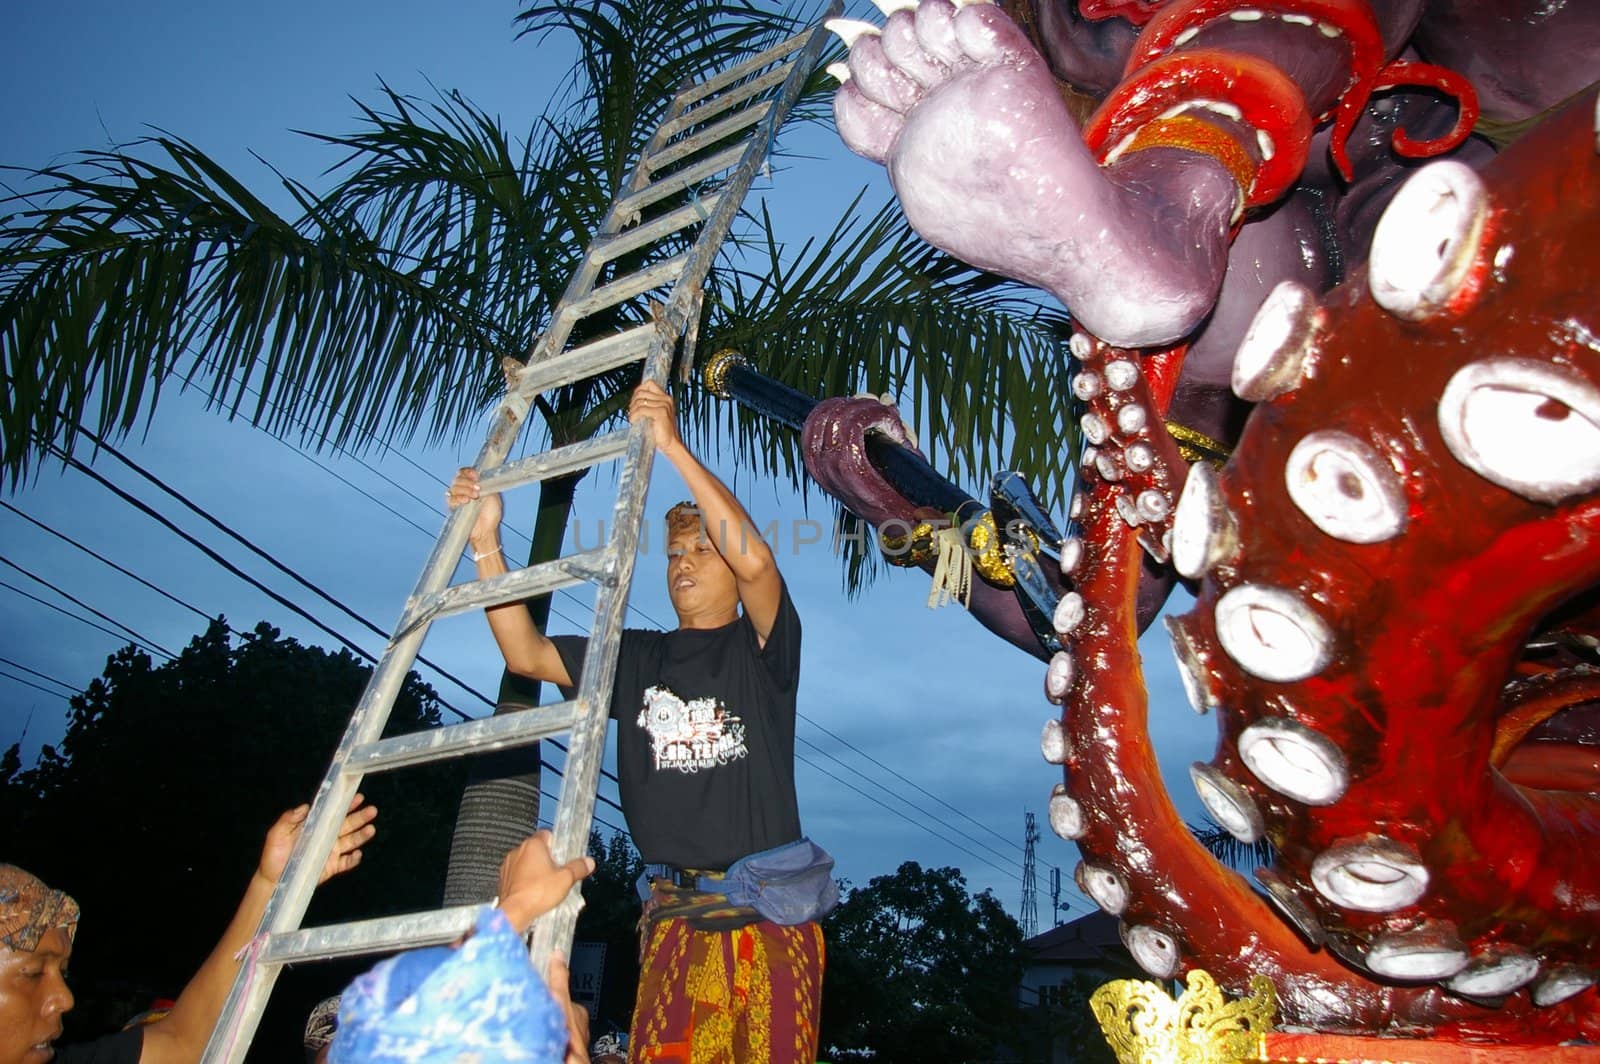 Ladder to climb a giant by Komar